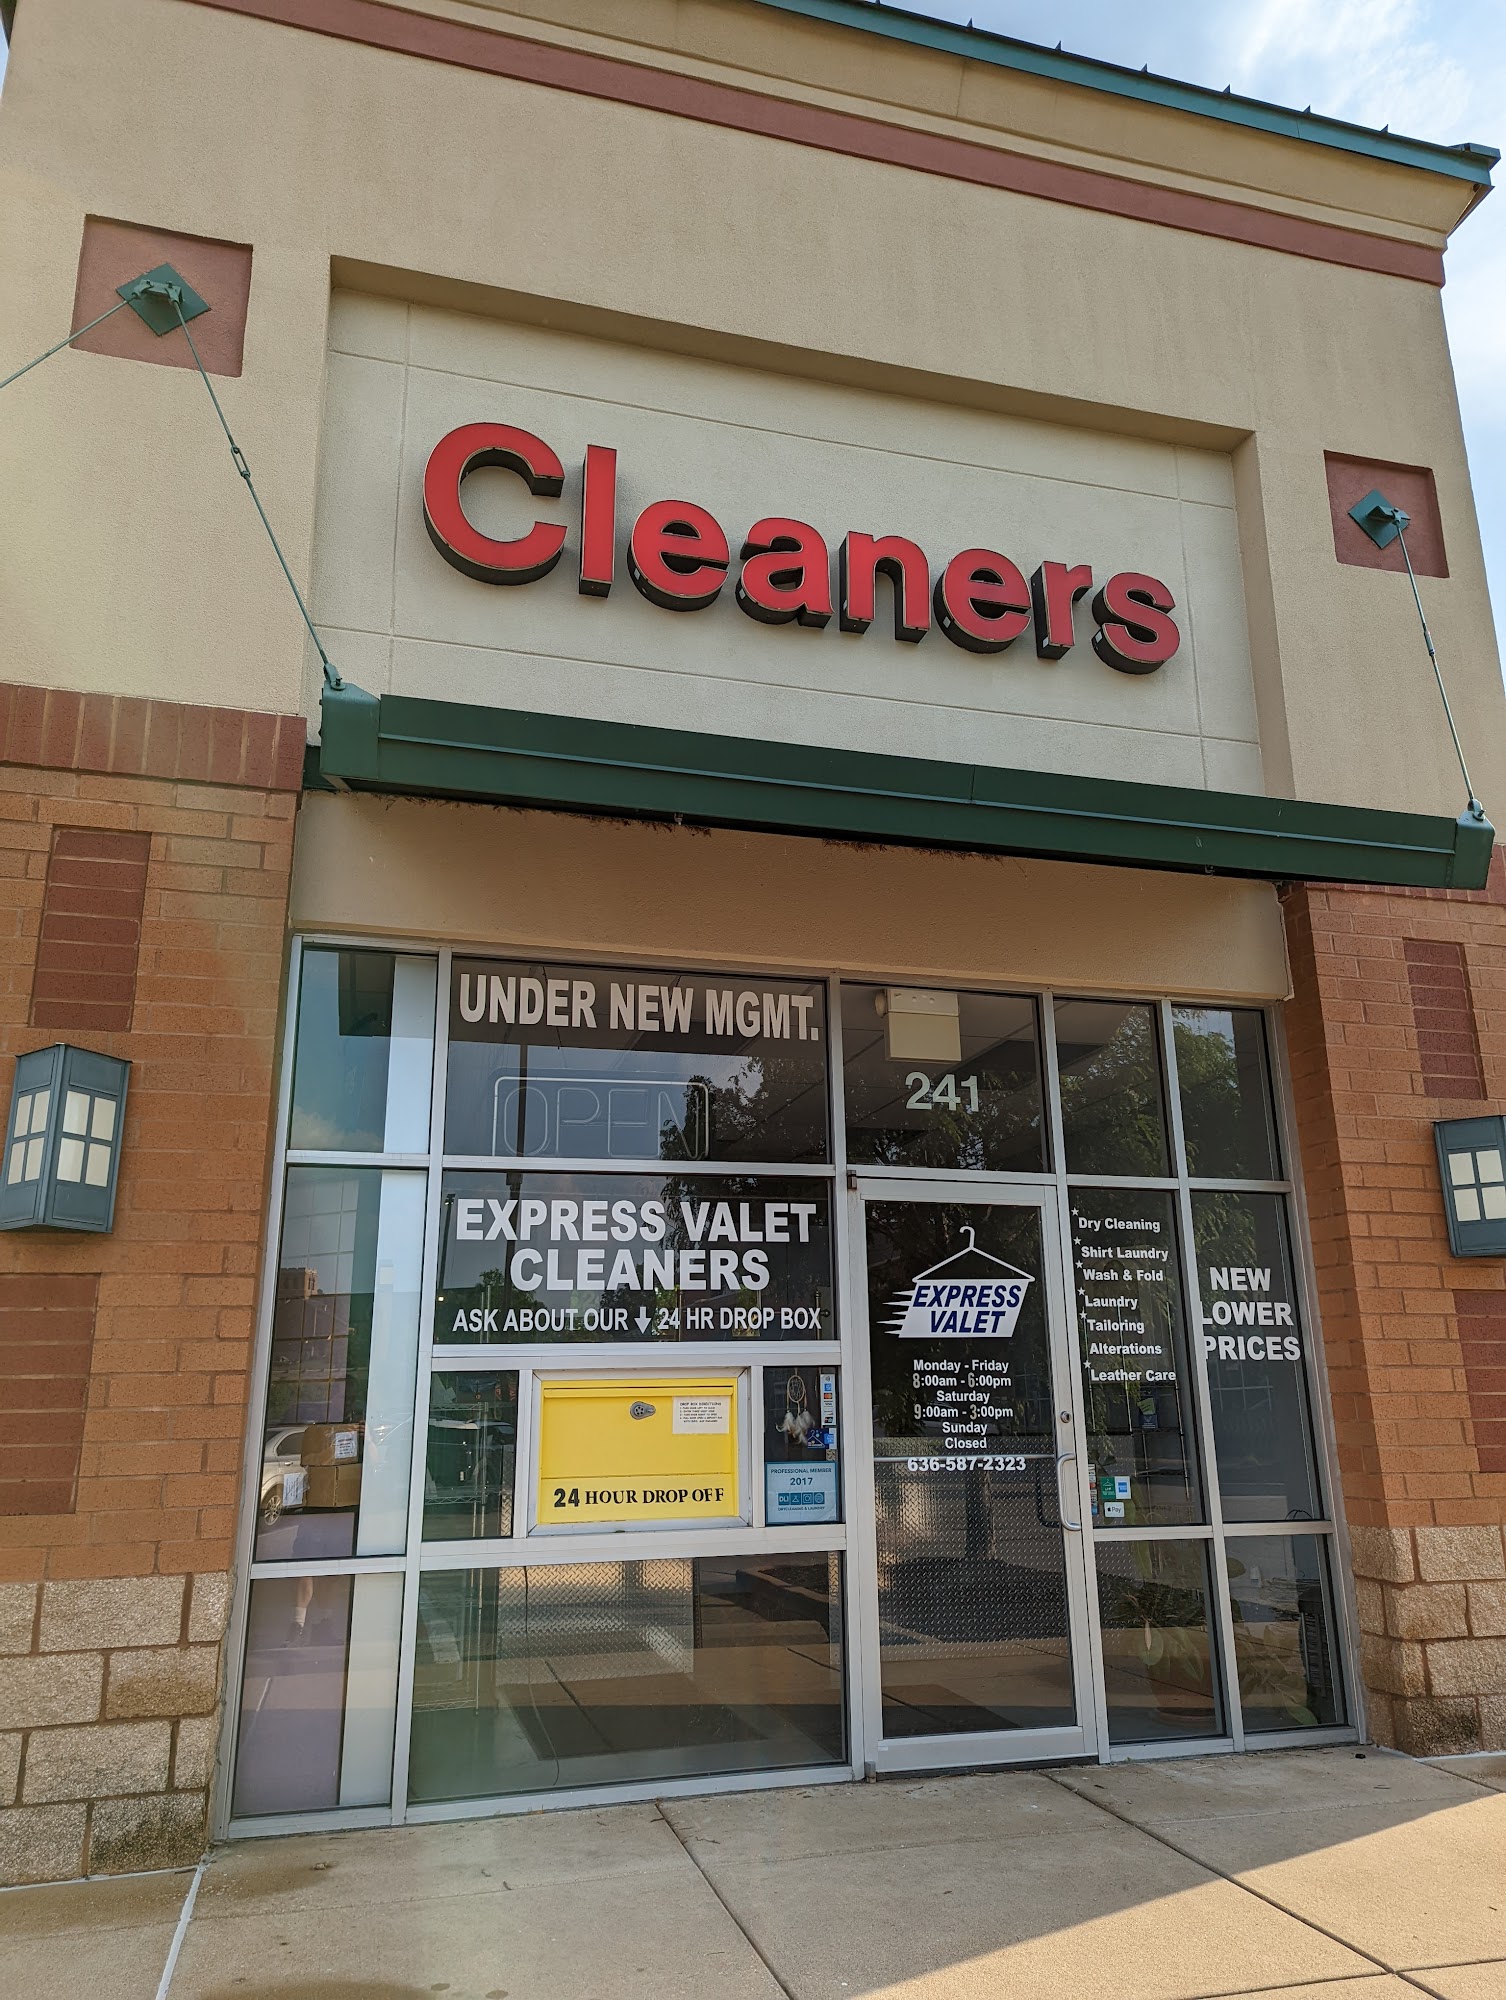 Express Valet Cleaners 241 E 5th St, Eureka Missouri 63025